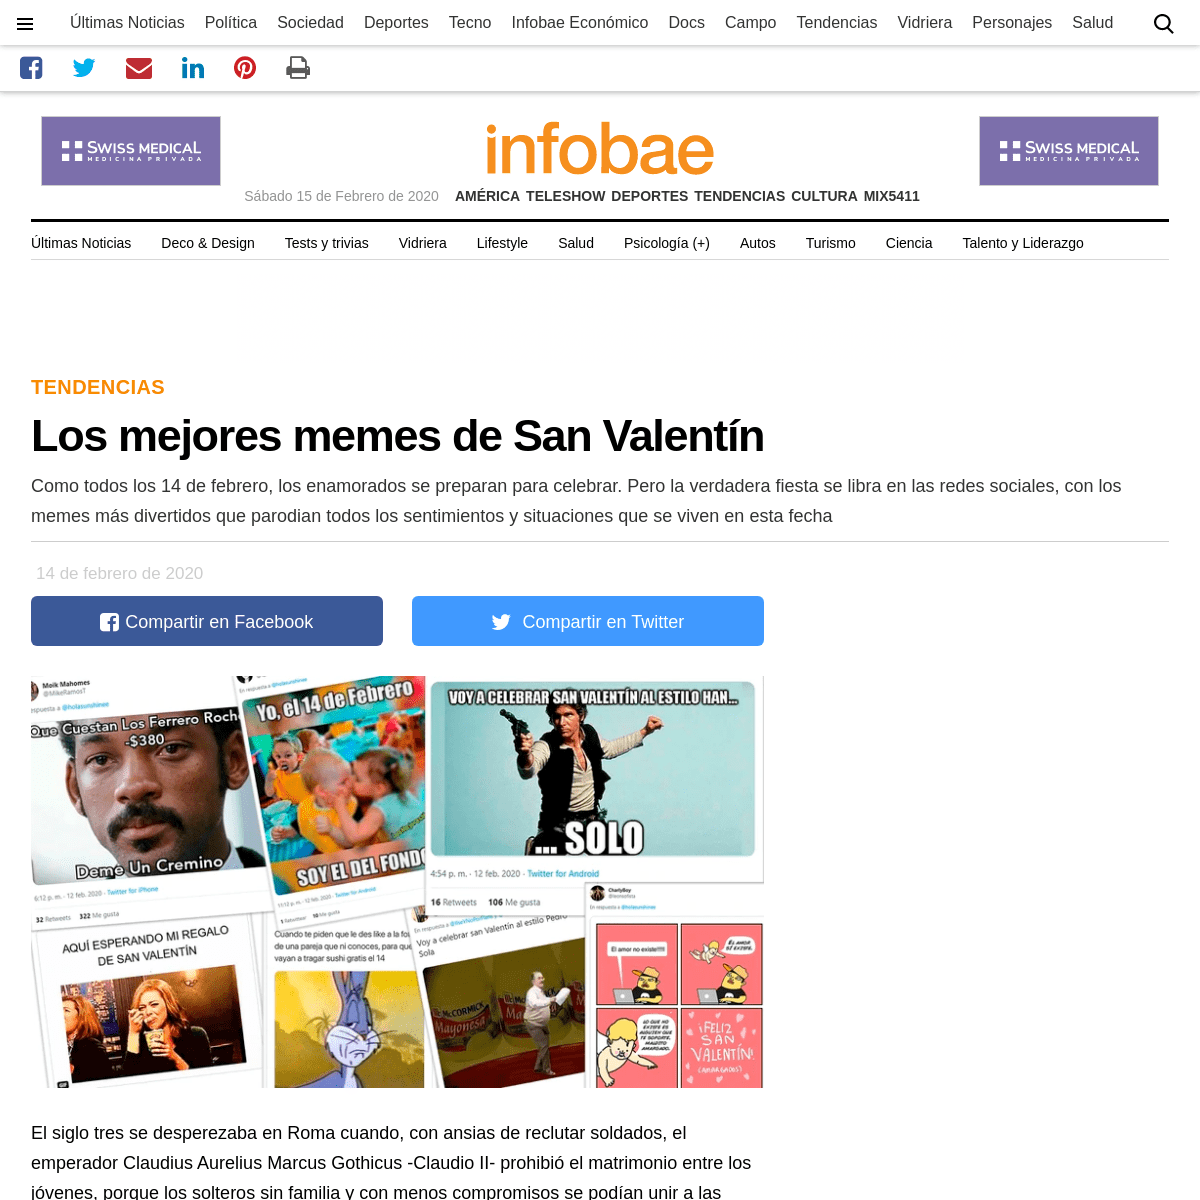 A complete backup of www.infobae.com/tendencias/2020/02/14/los-mejores-memes-de-san-valentin/